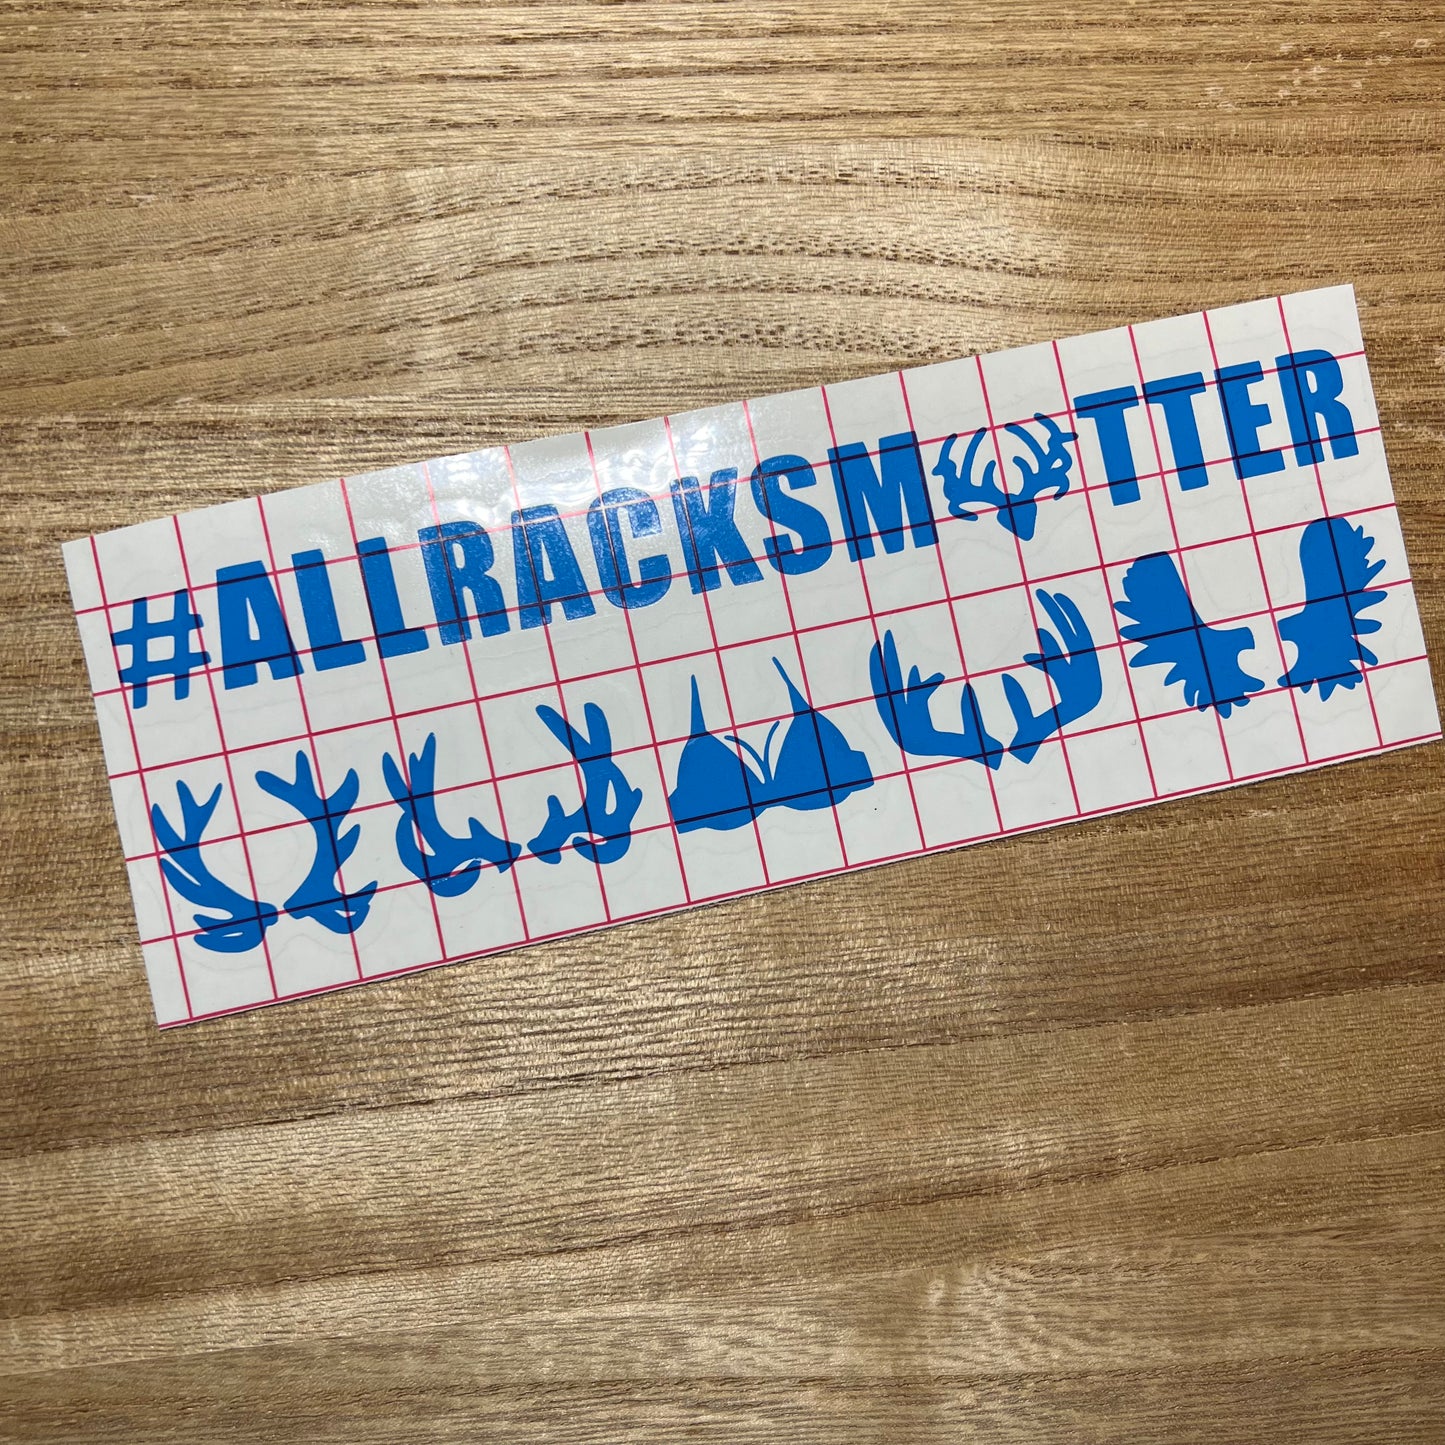 All Racks Matter Vinyl Decal